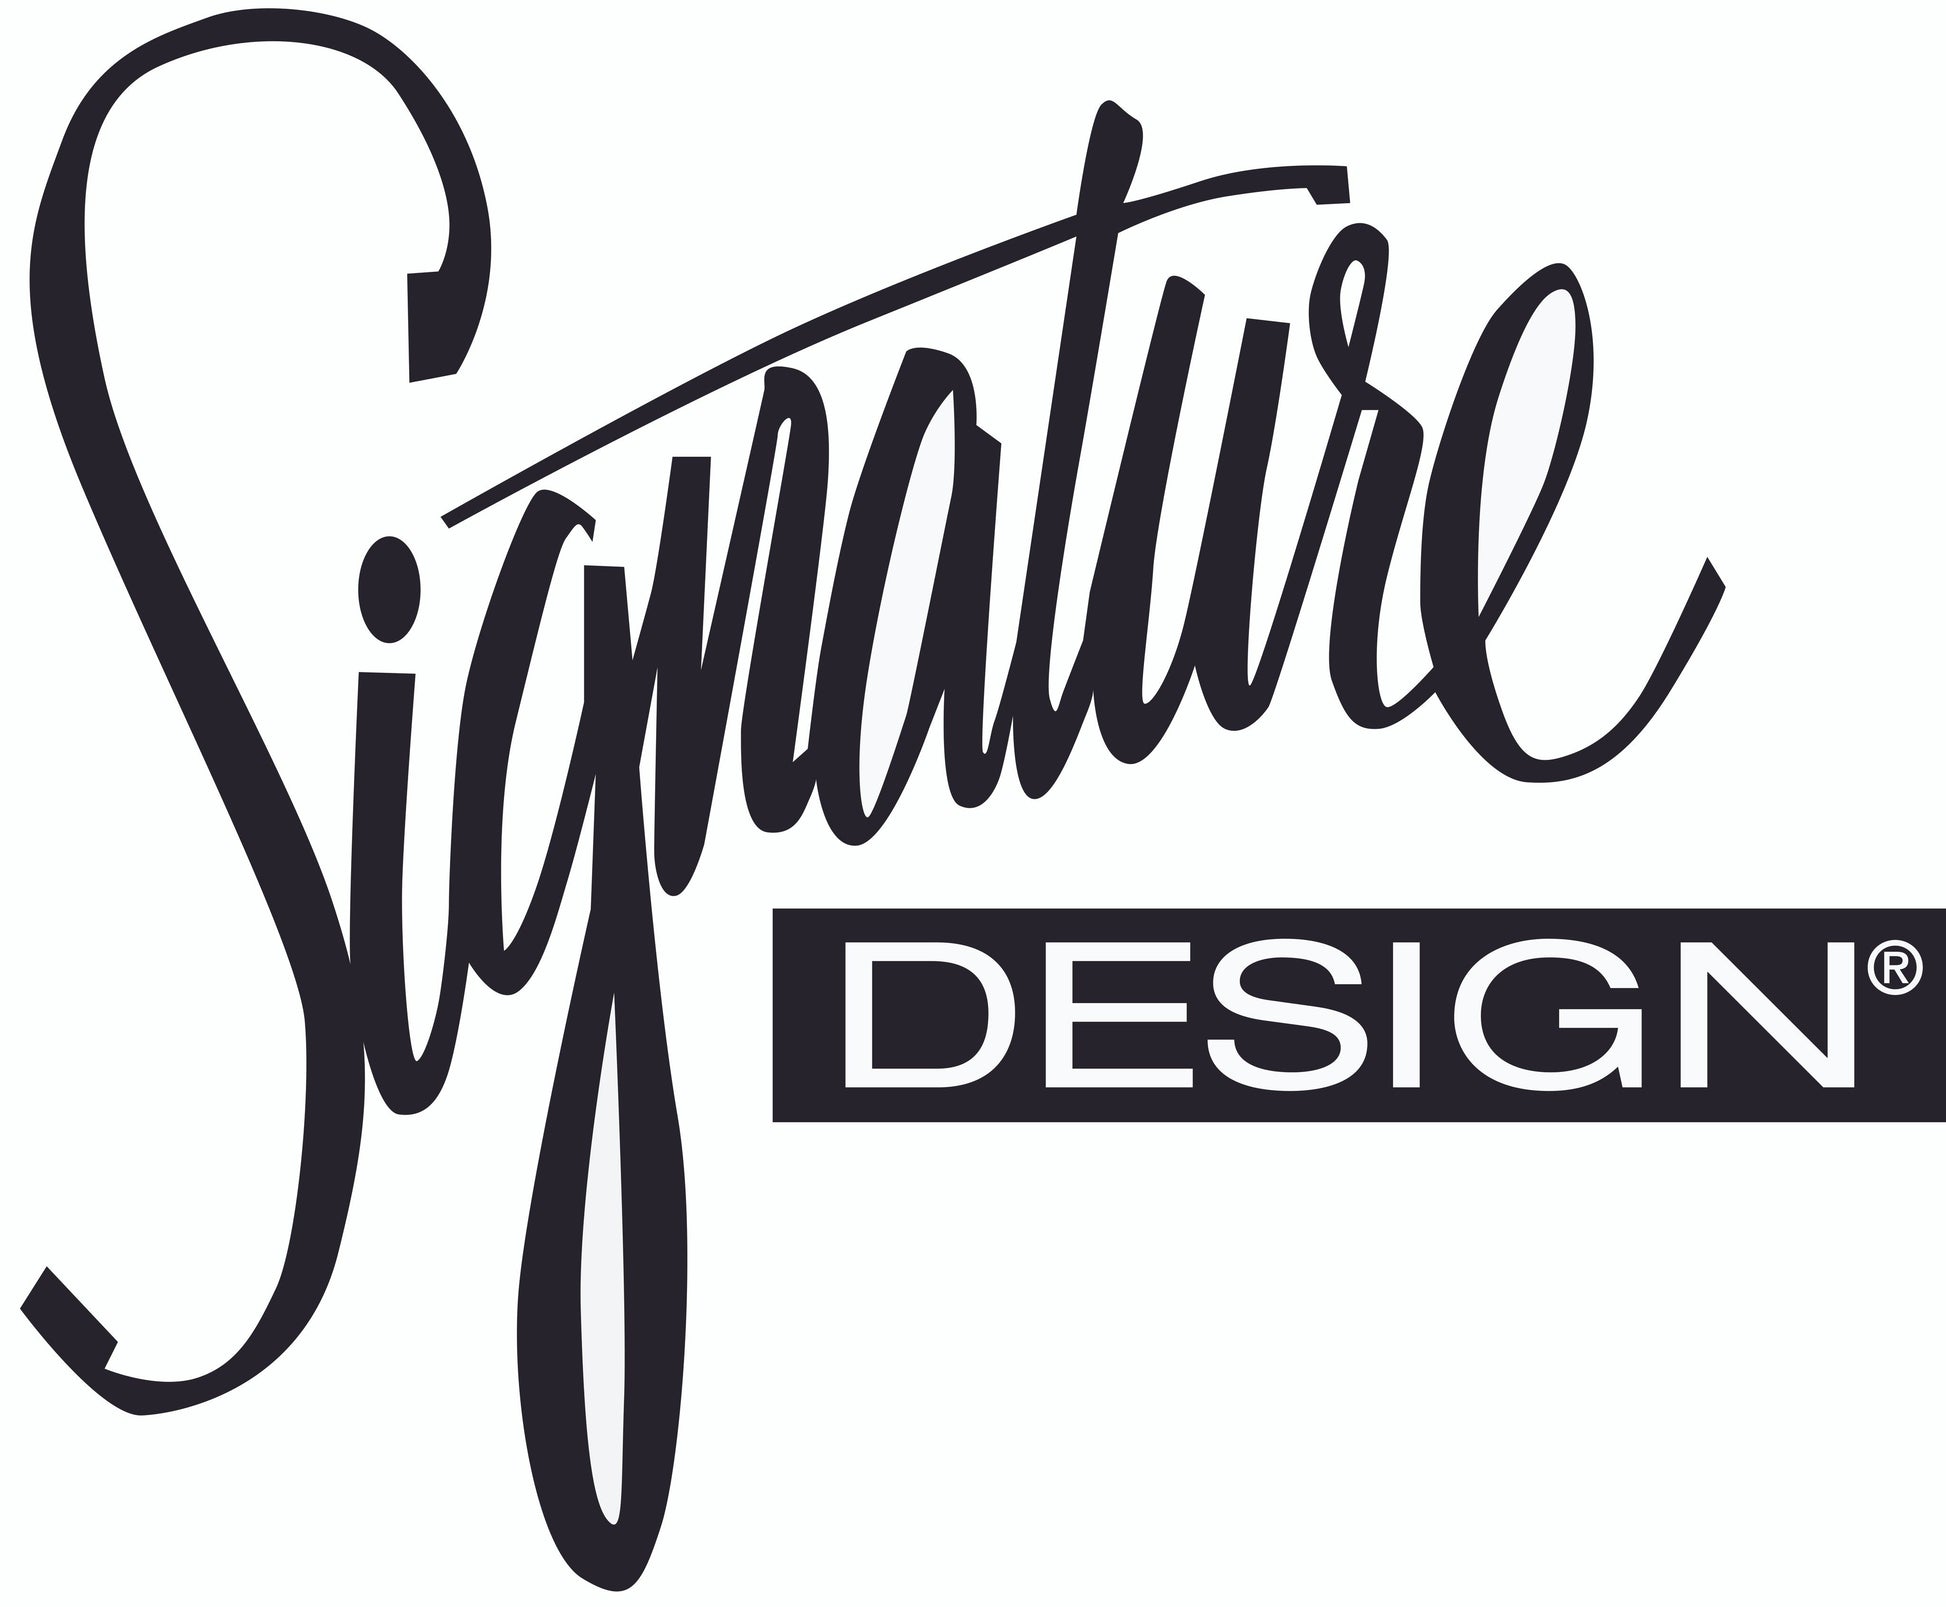 Boxberg Reclining Sofa Signature Design by Ashley®